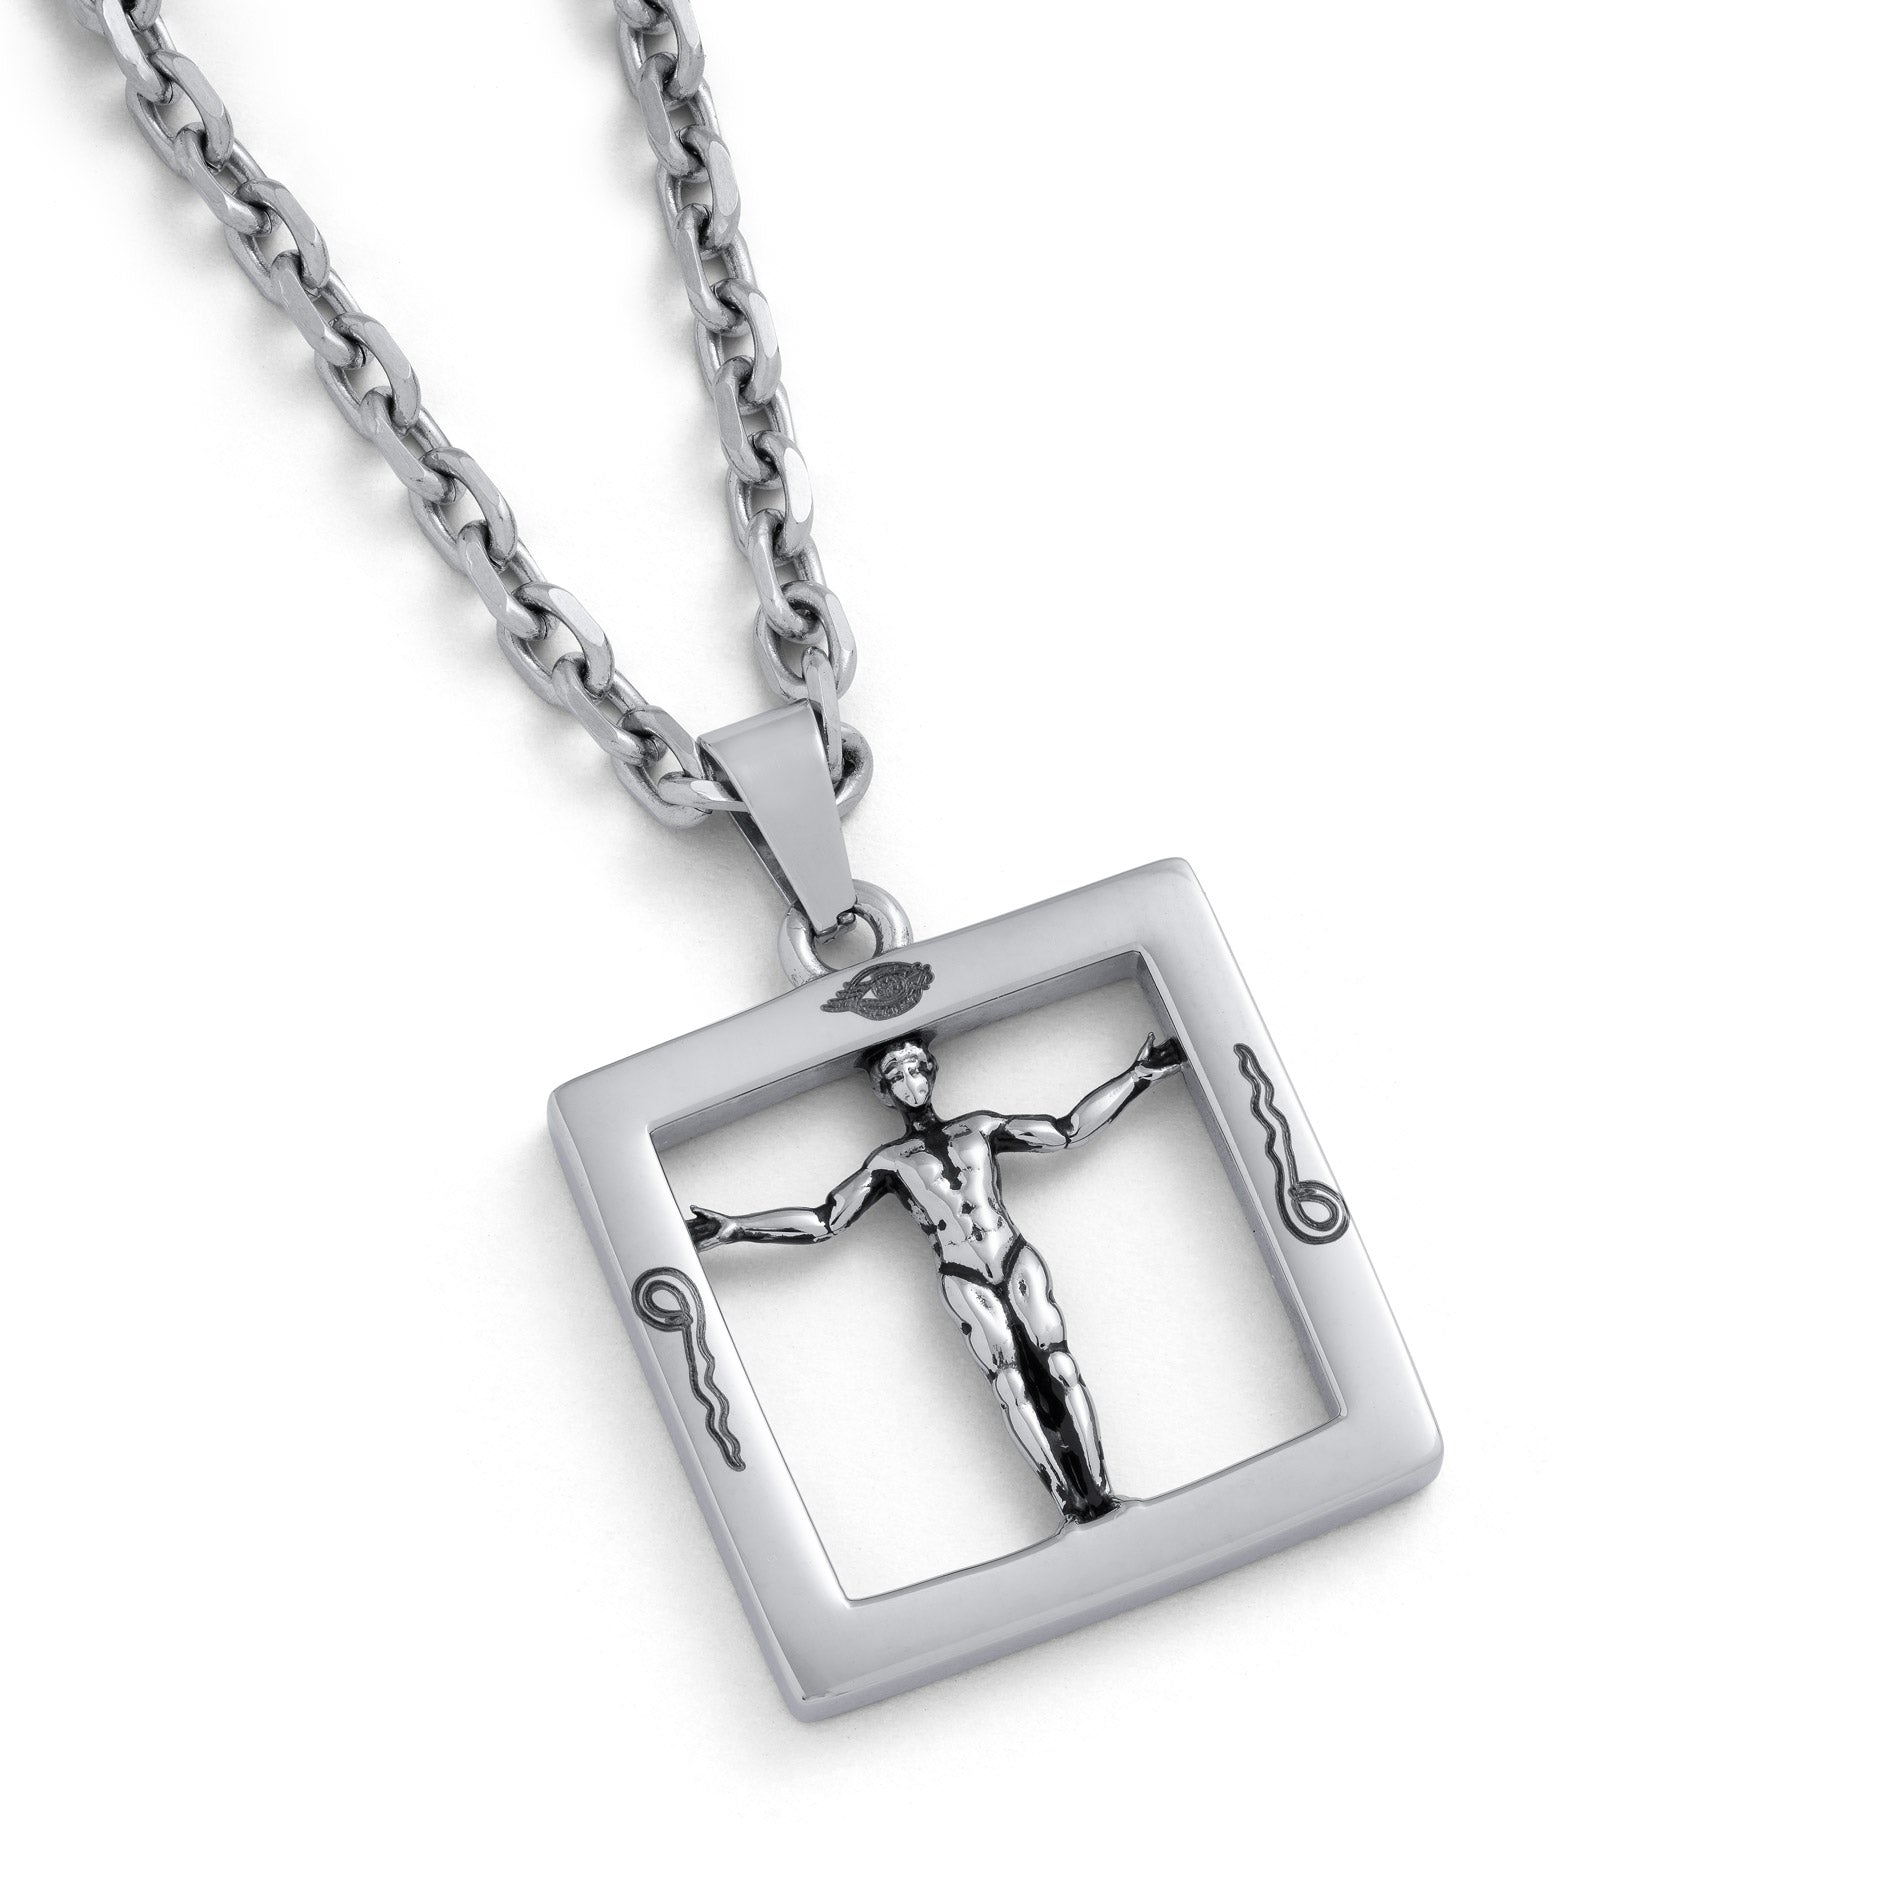 Square silver necklace pendant charm